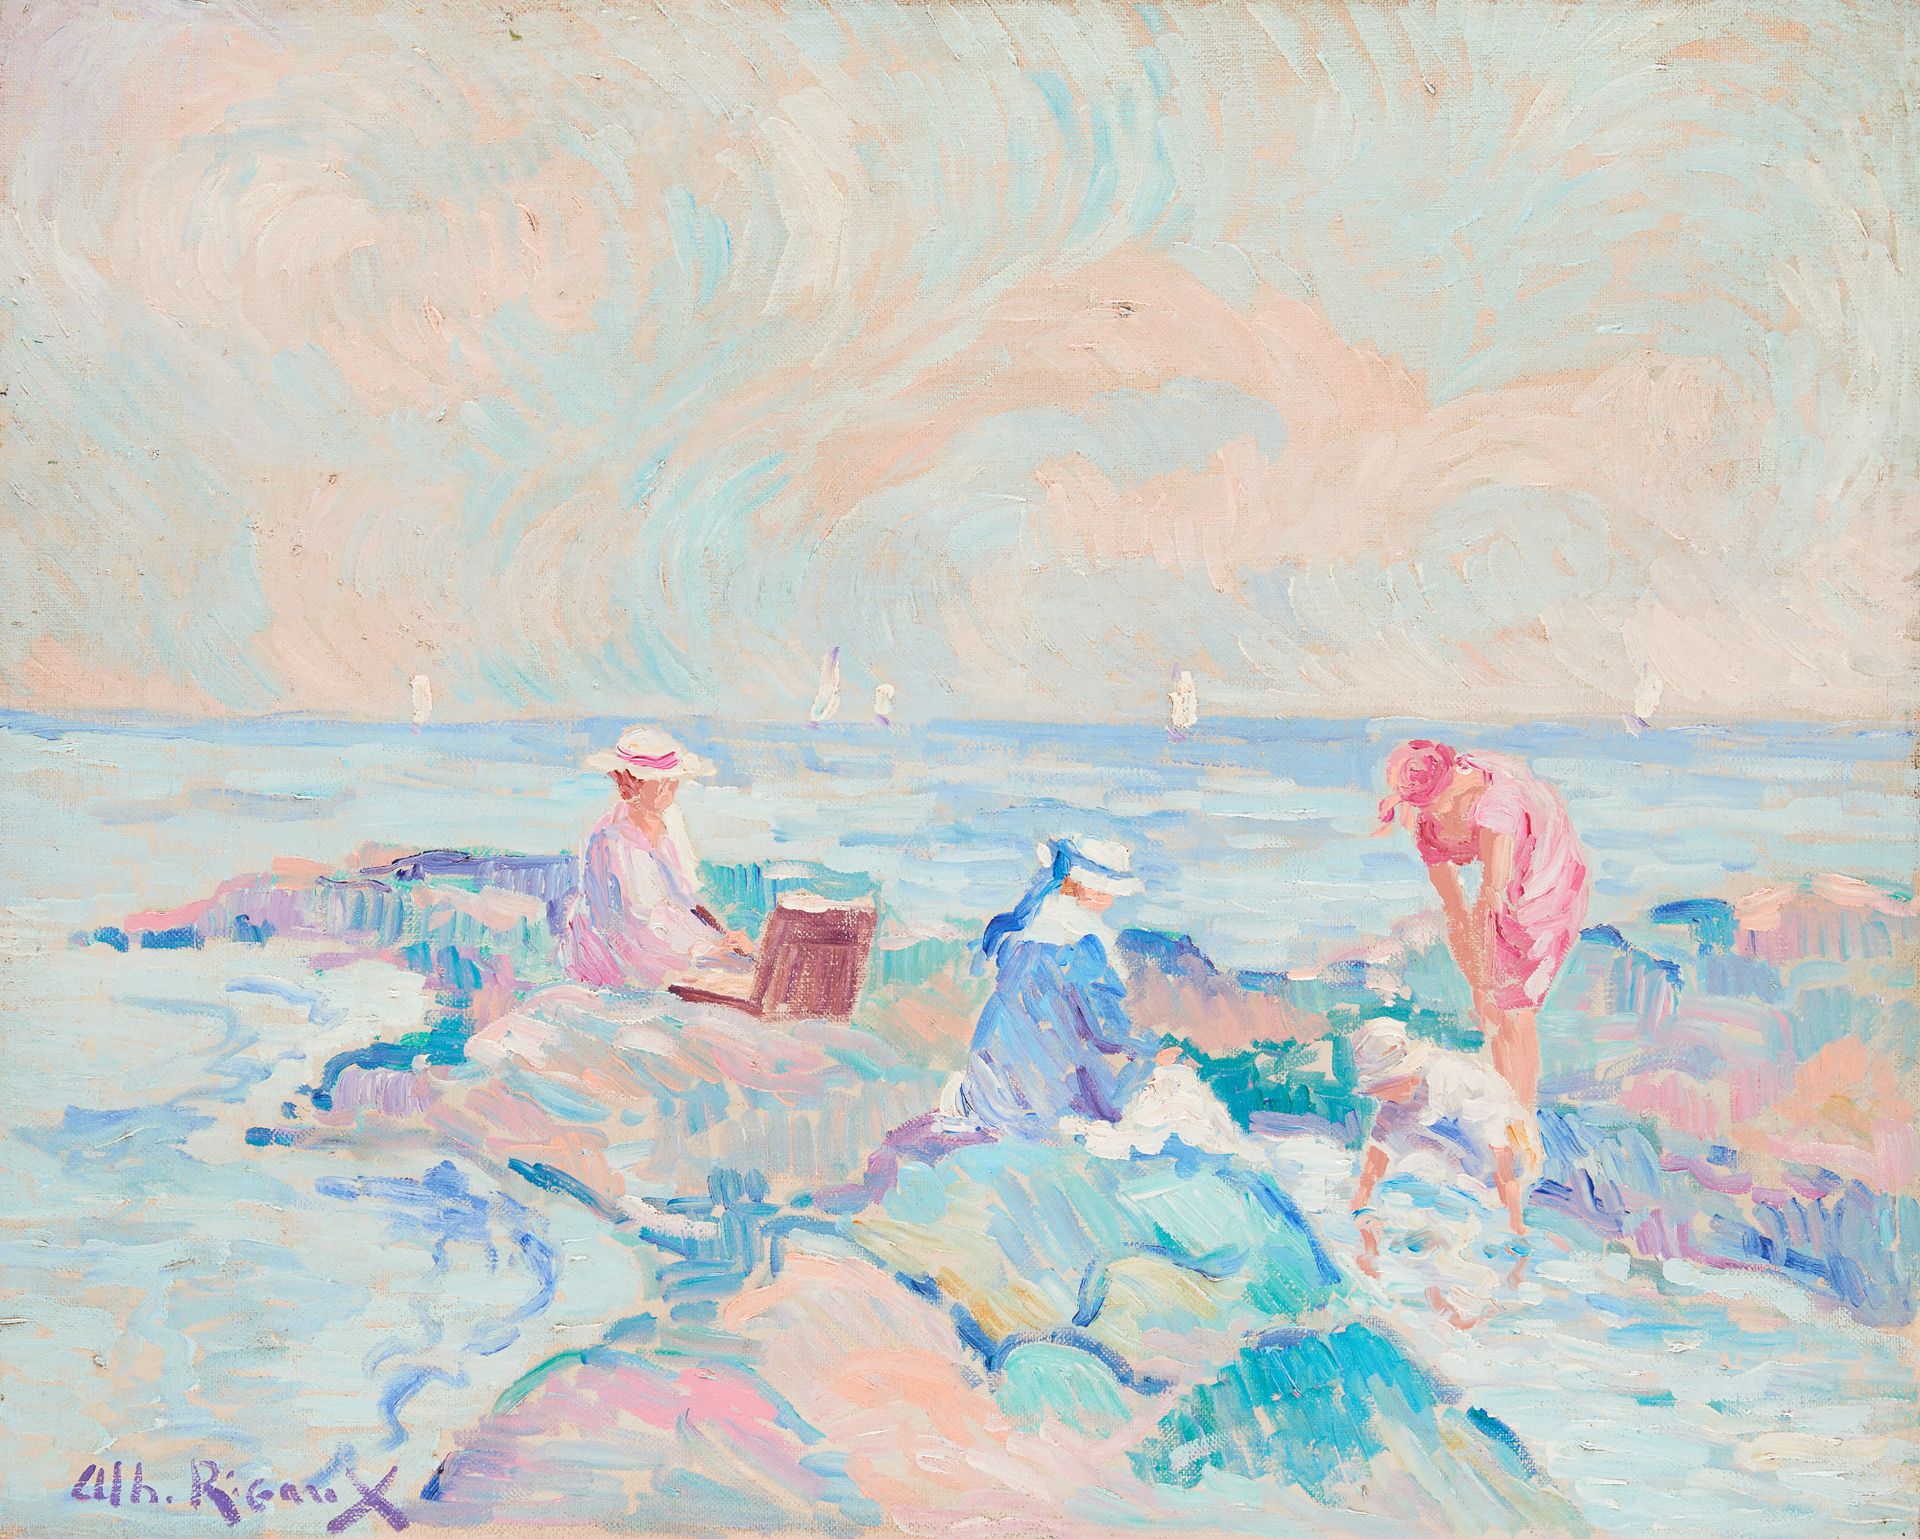 Albert RIGAUX École belge (1954) Oil on canvas: The artist on the breakwater.

S&hellip;